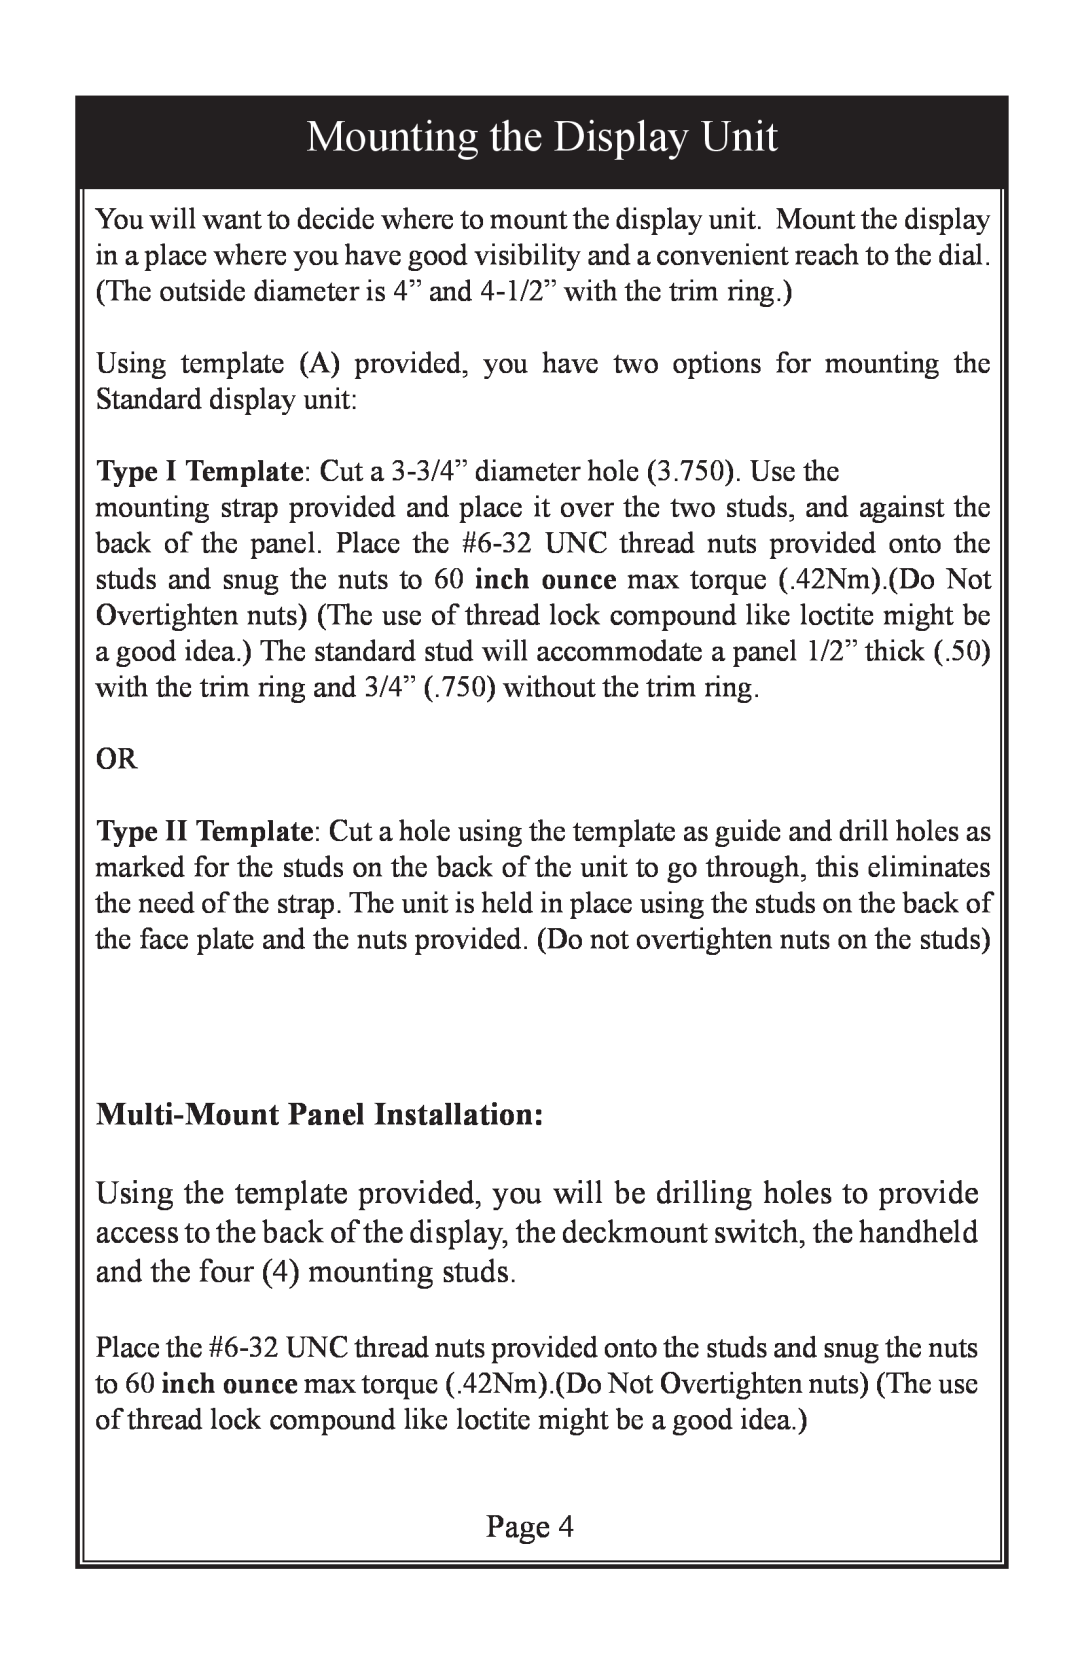 Garmin TR-1 owner manual Mounting the Display Unit, Multi-Mount Panel Installation 